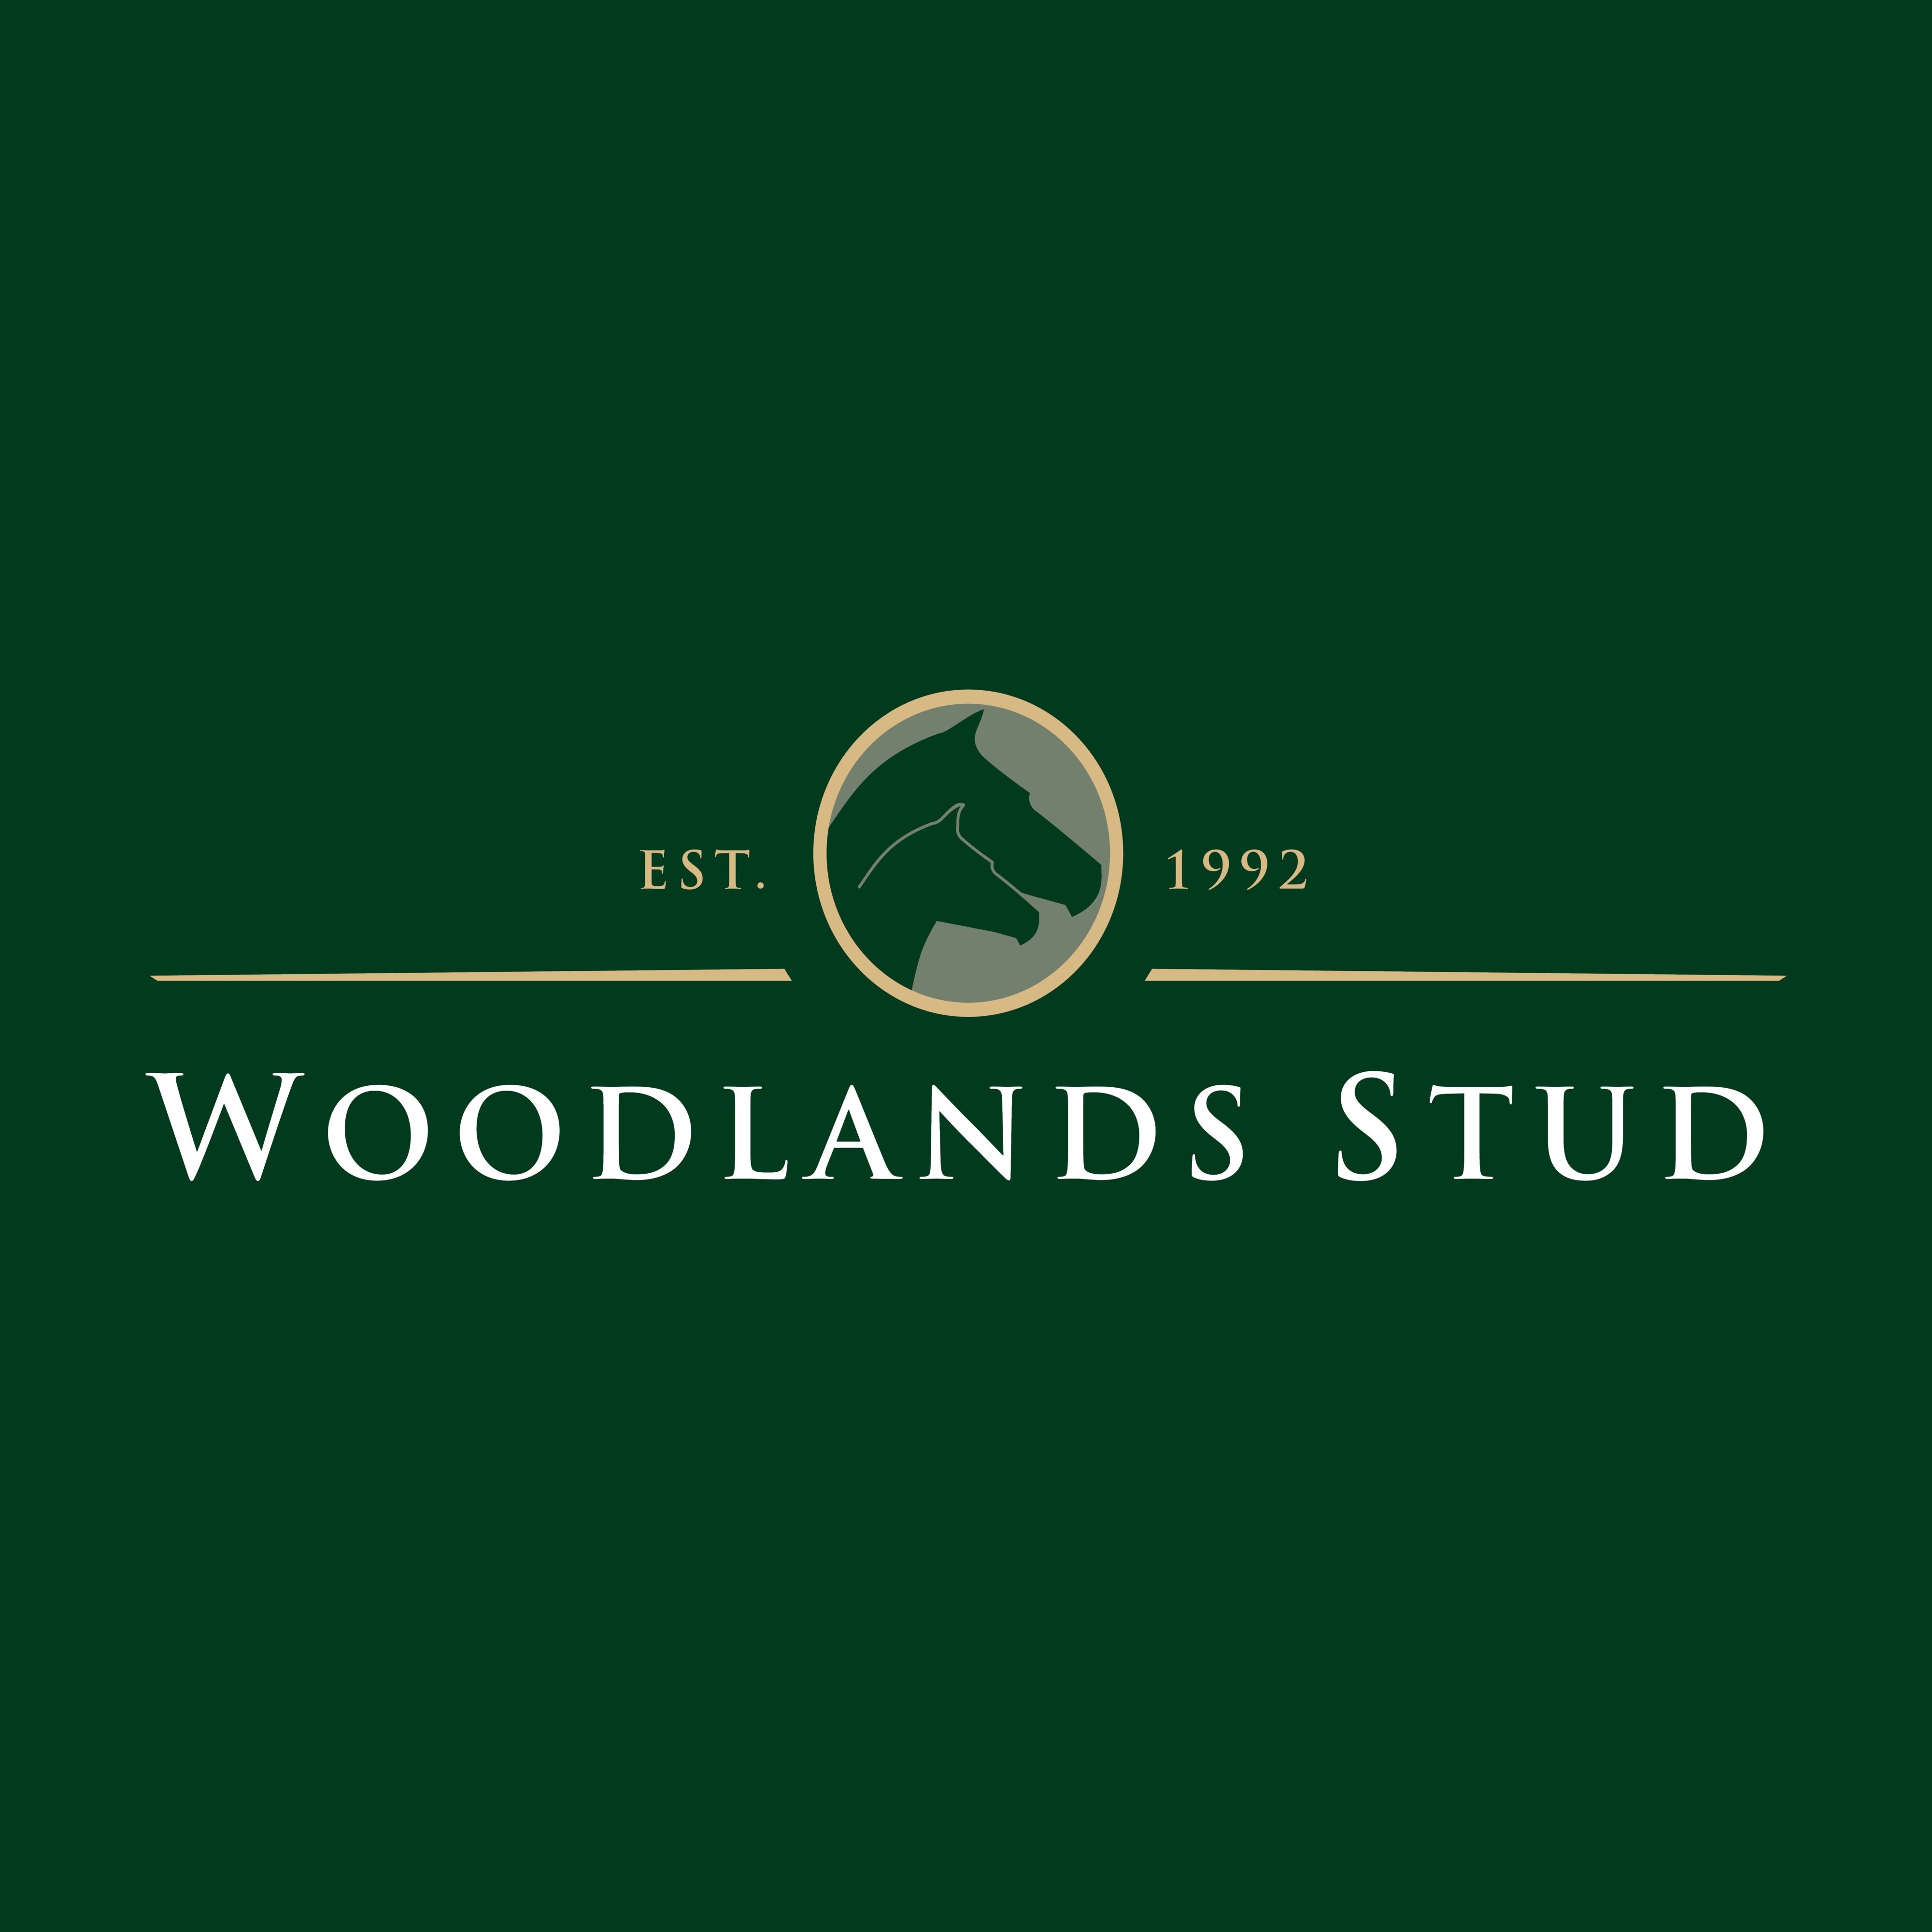 Woodlands Stud